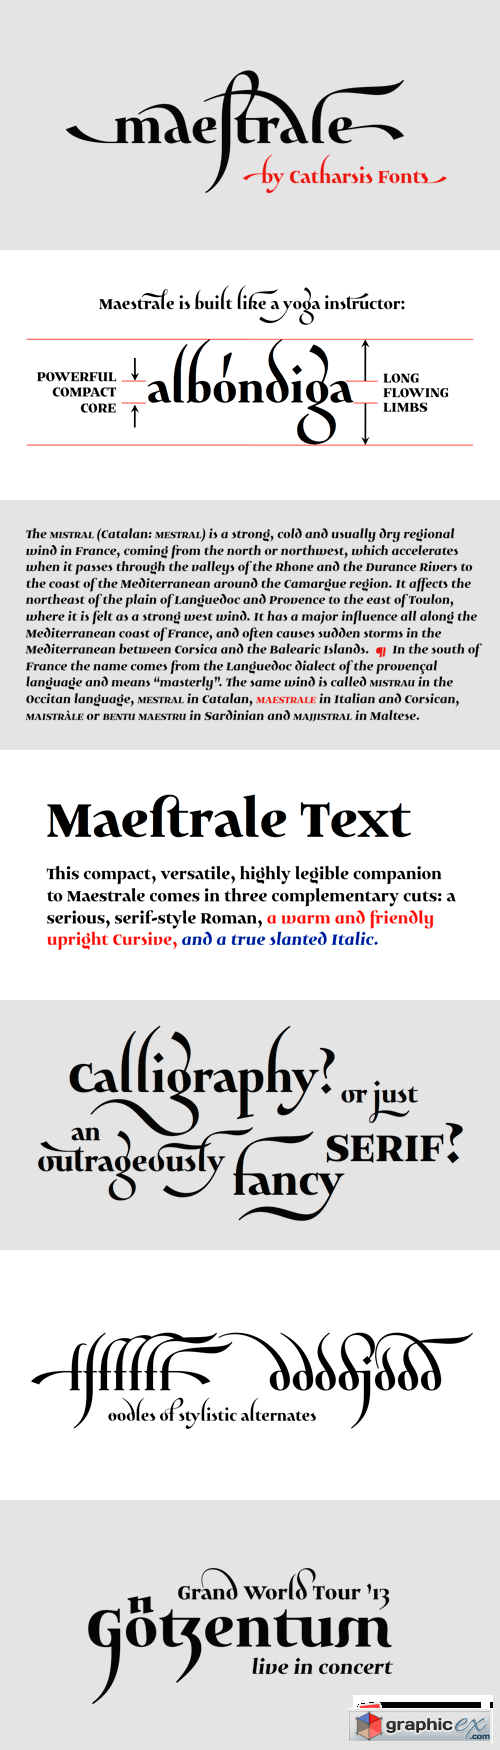 Maestrale Font Family - 5 Fonts for $60